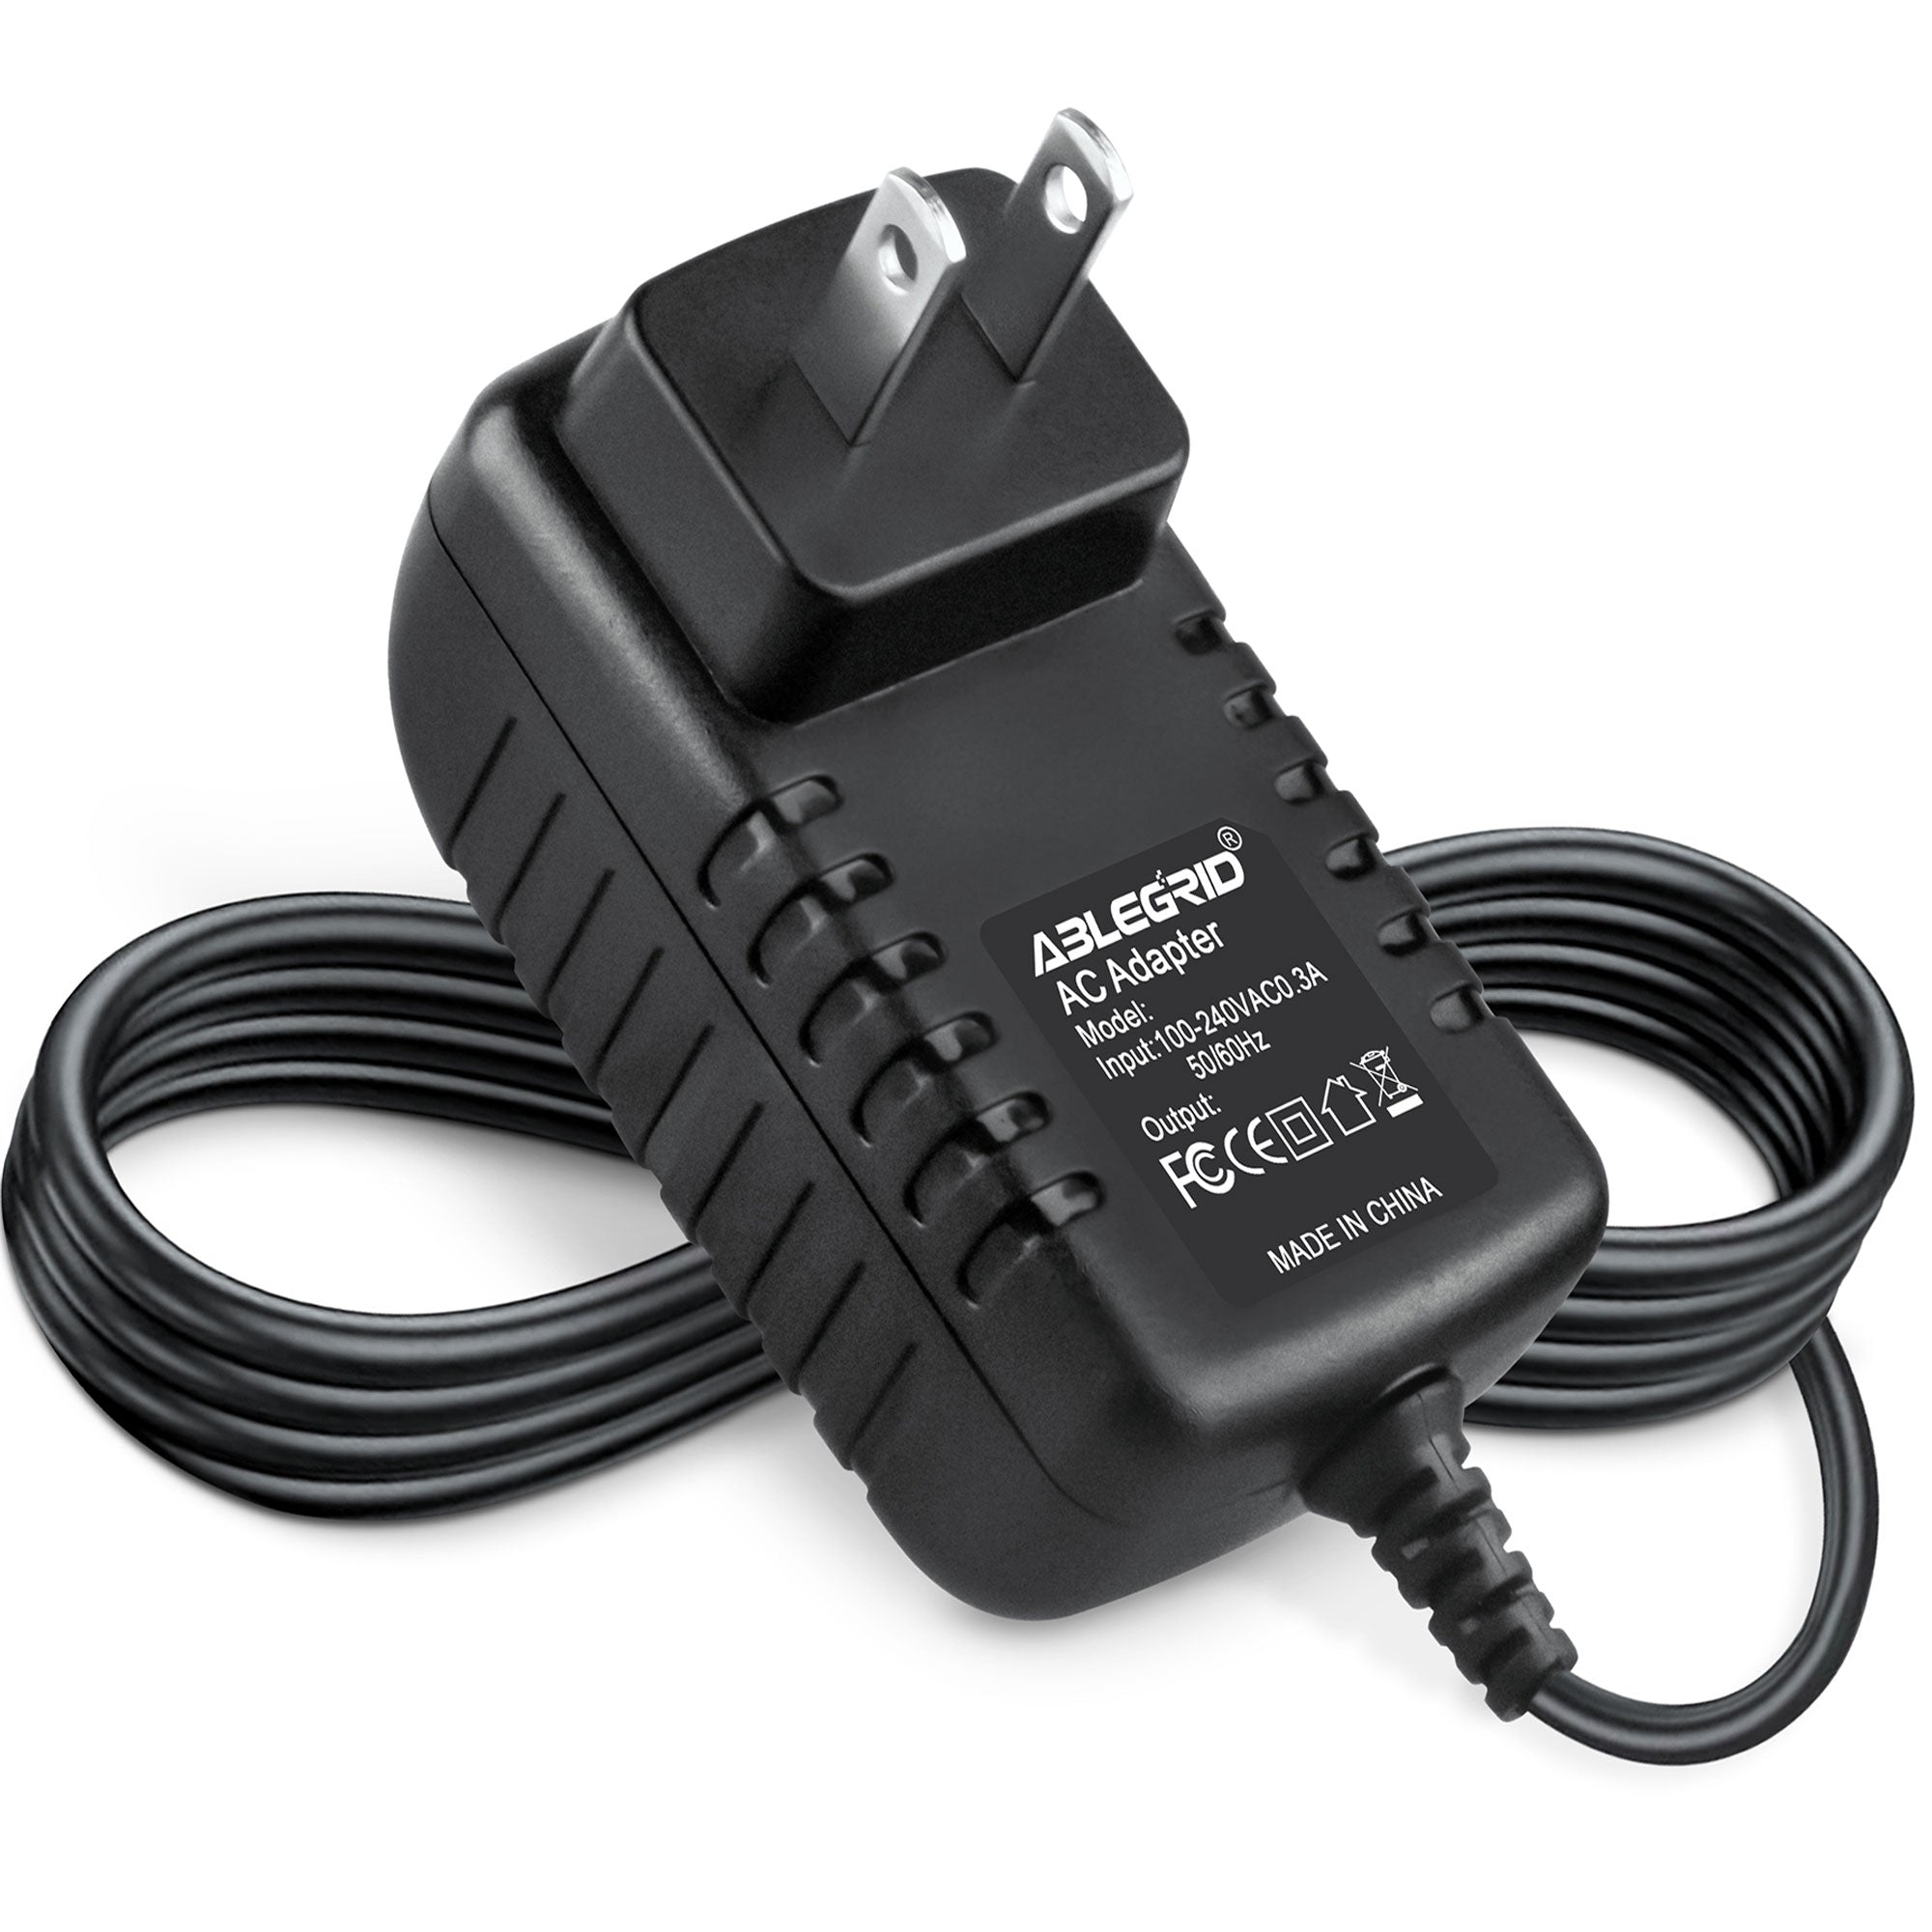 AbleGrid AC Adapter for Panasonic KX-TGA652 KX-TG6631 KX-TG6632 KX-TG6633 DECT6.0 Power Supply Cord Charger PSU